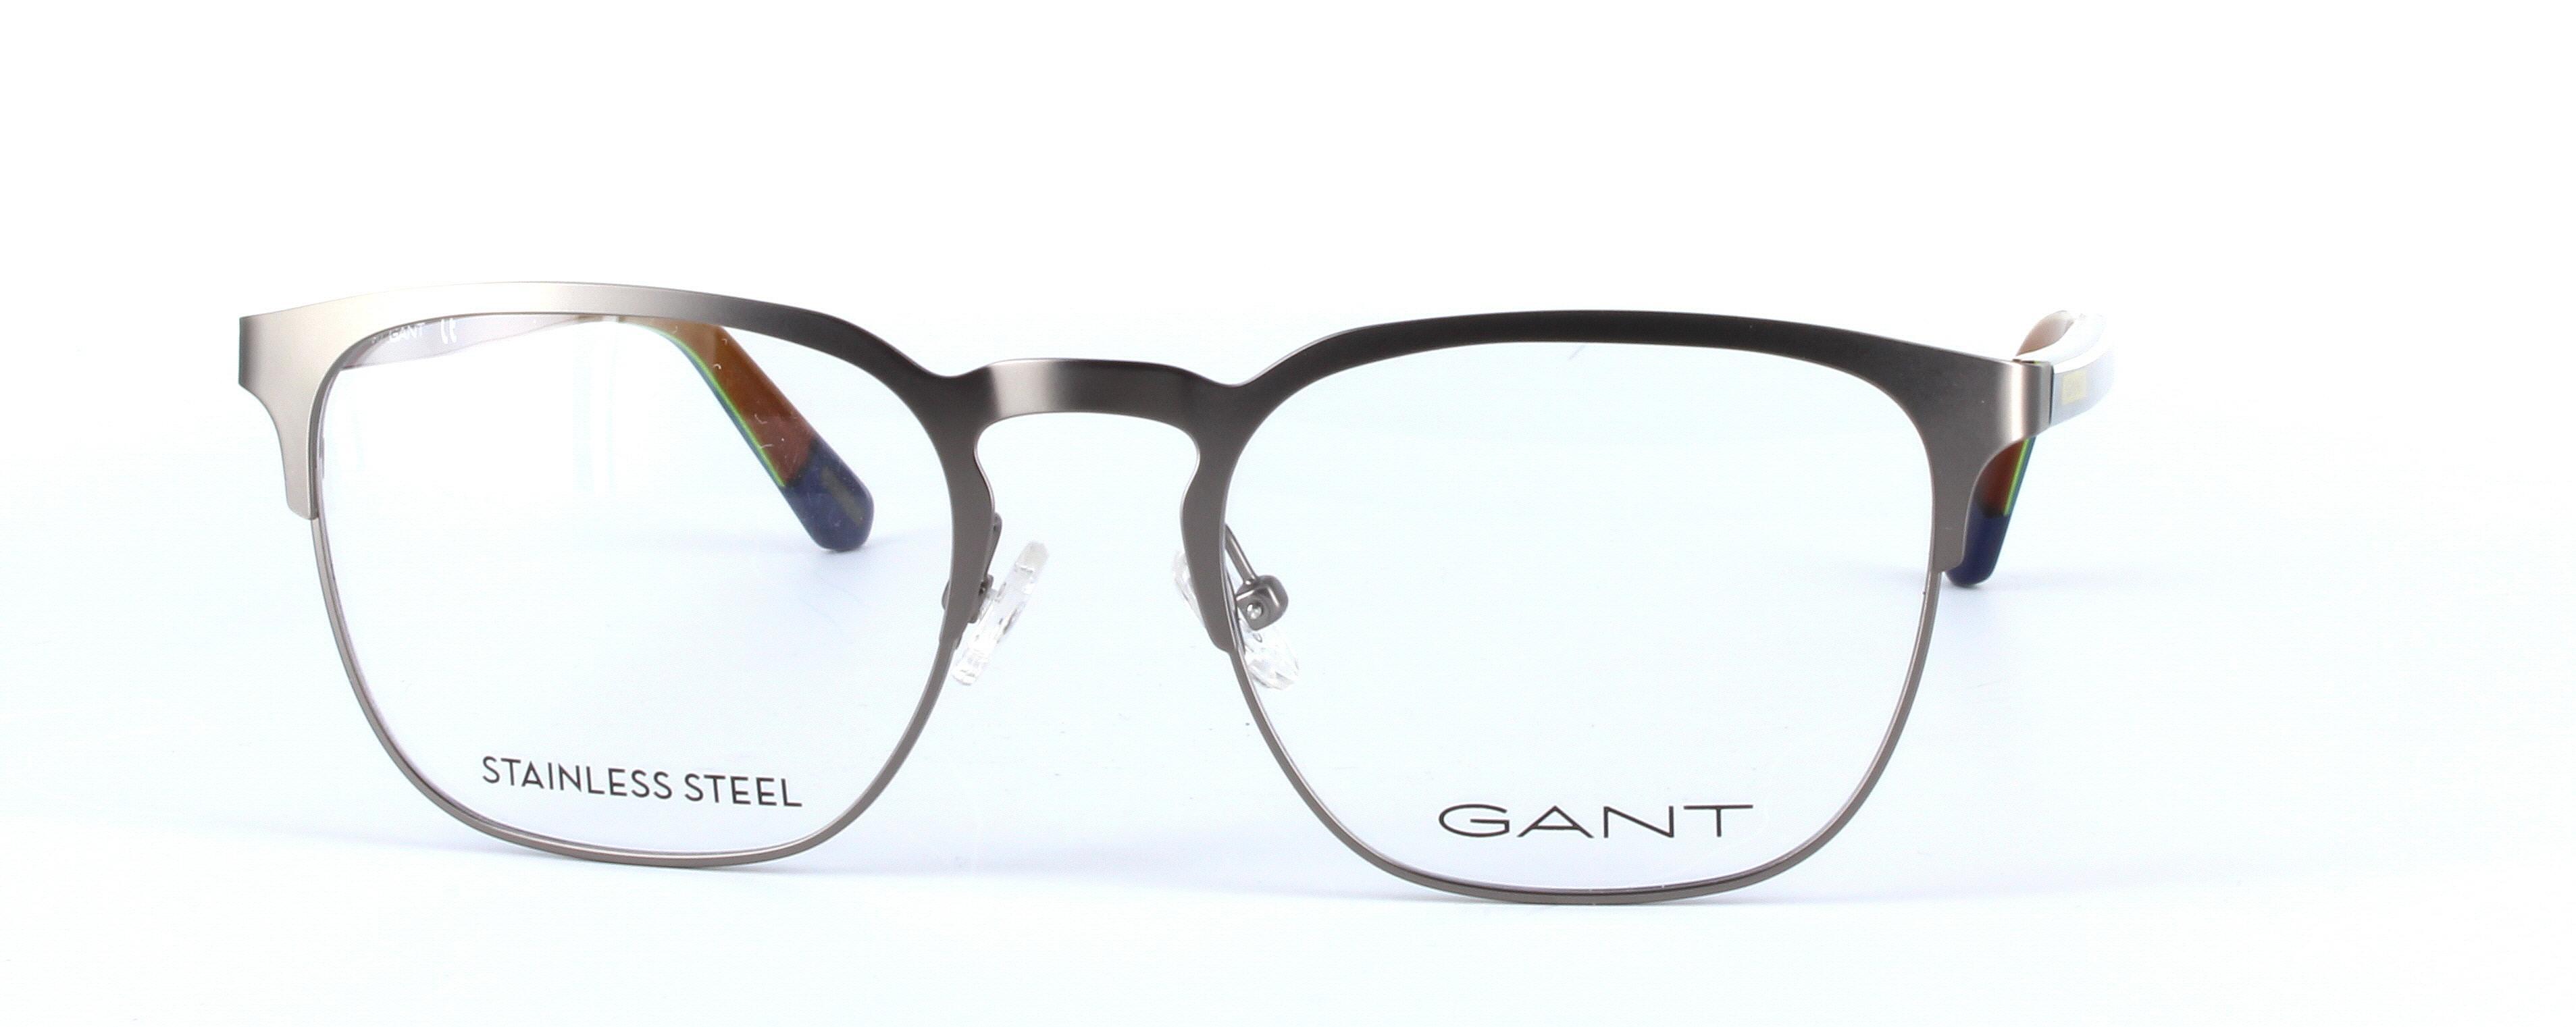 GANT (GA3144-009) Gunmetal Full Rim Oval Round Metal Glasses - Image View 5